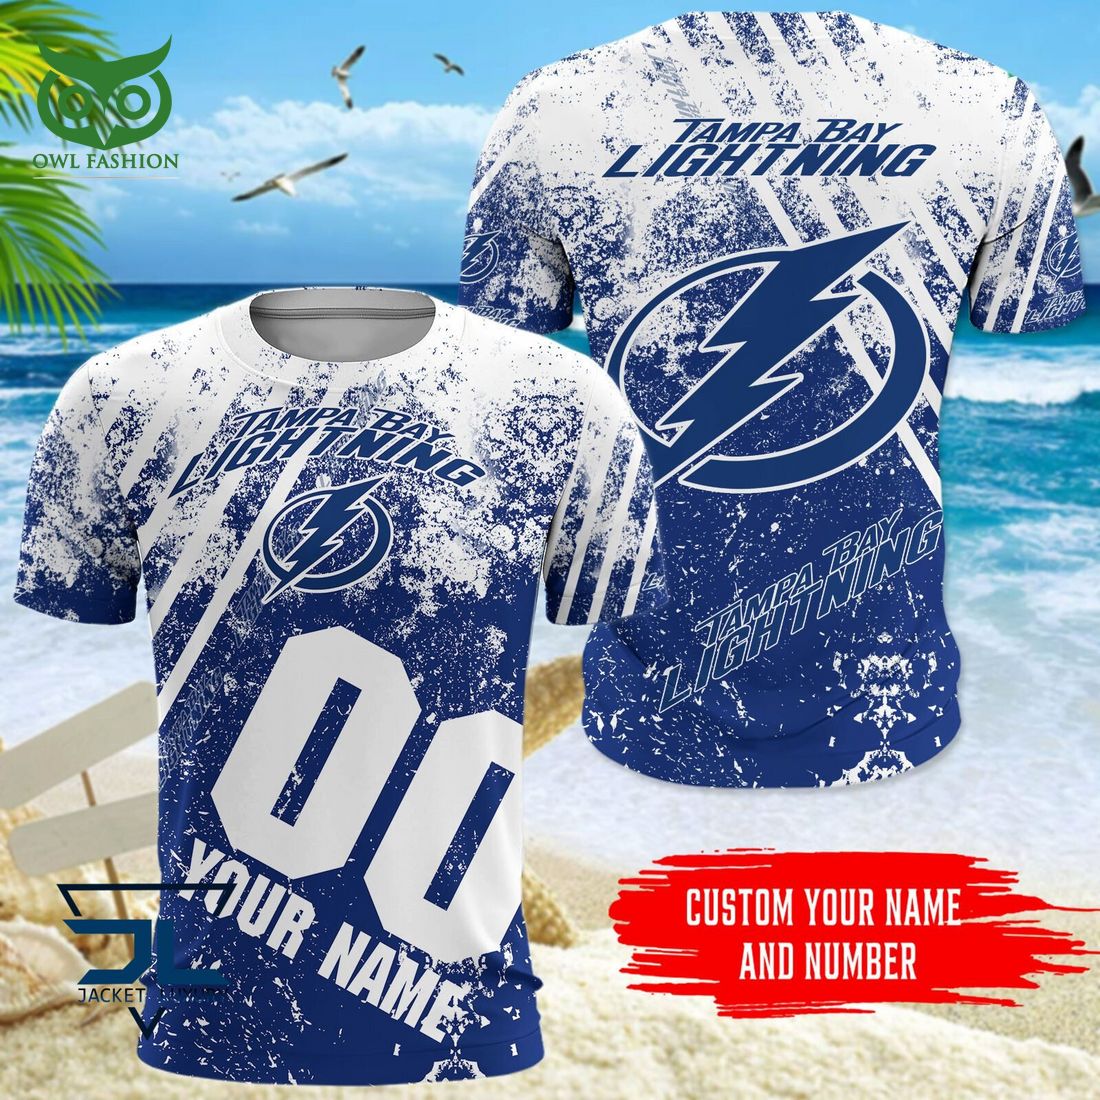 Top-selling item] Custom NHL Tampa Bay Lightning Blue Version